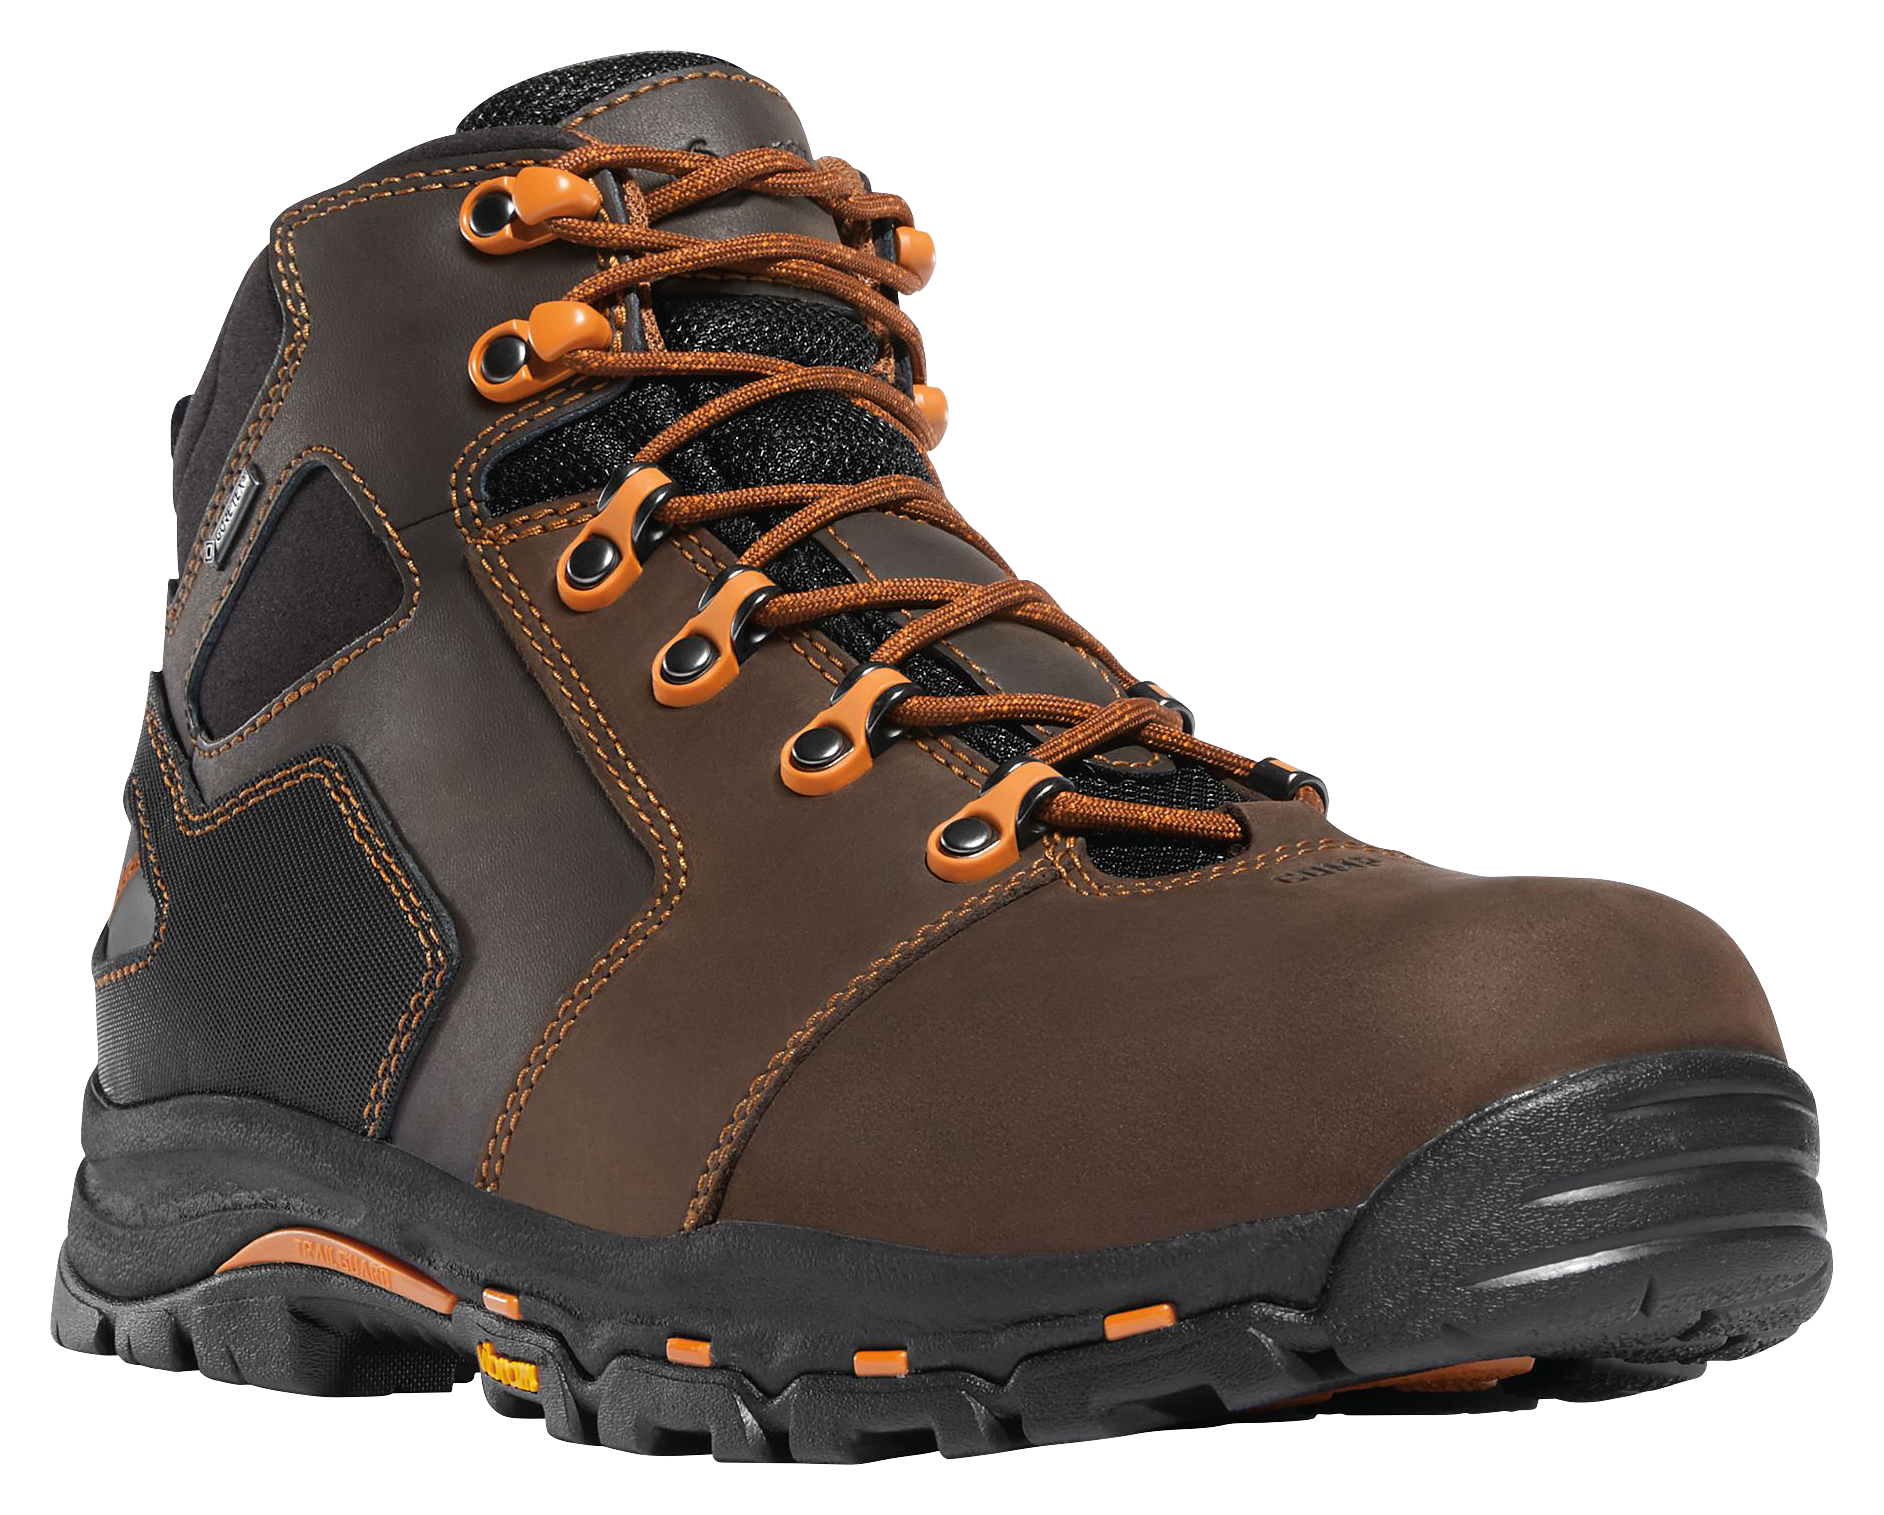 Danner Vicious 4.5'' GORE-TEX EH Work Boots for Men - Brown/Orange - 10W